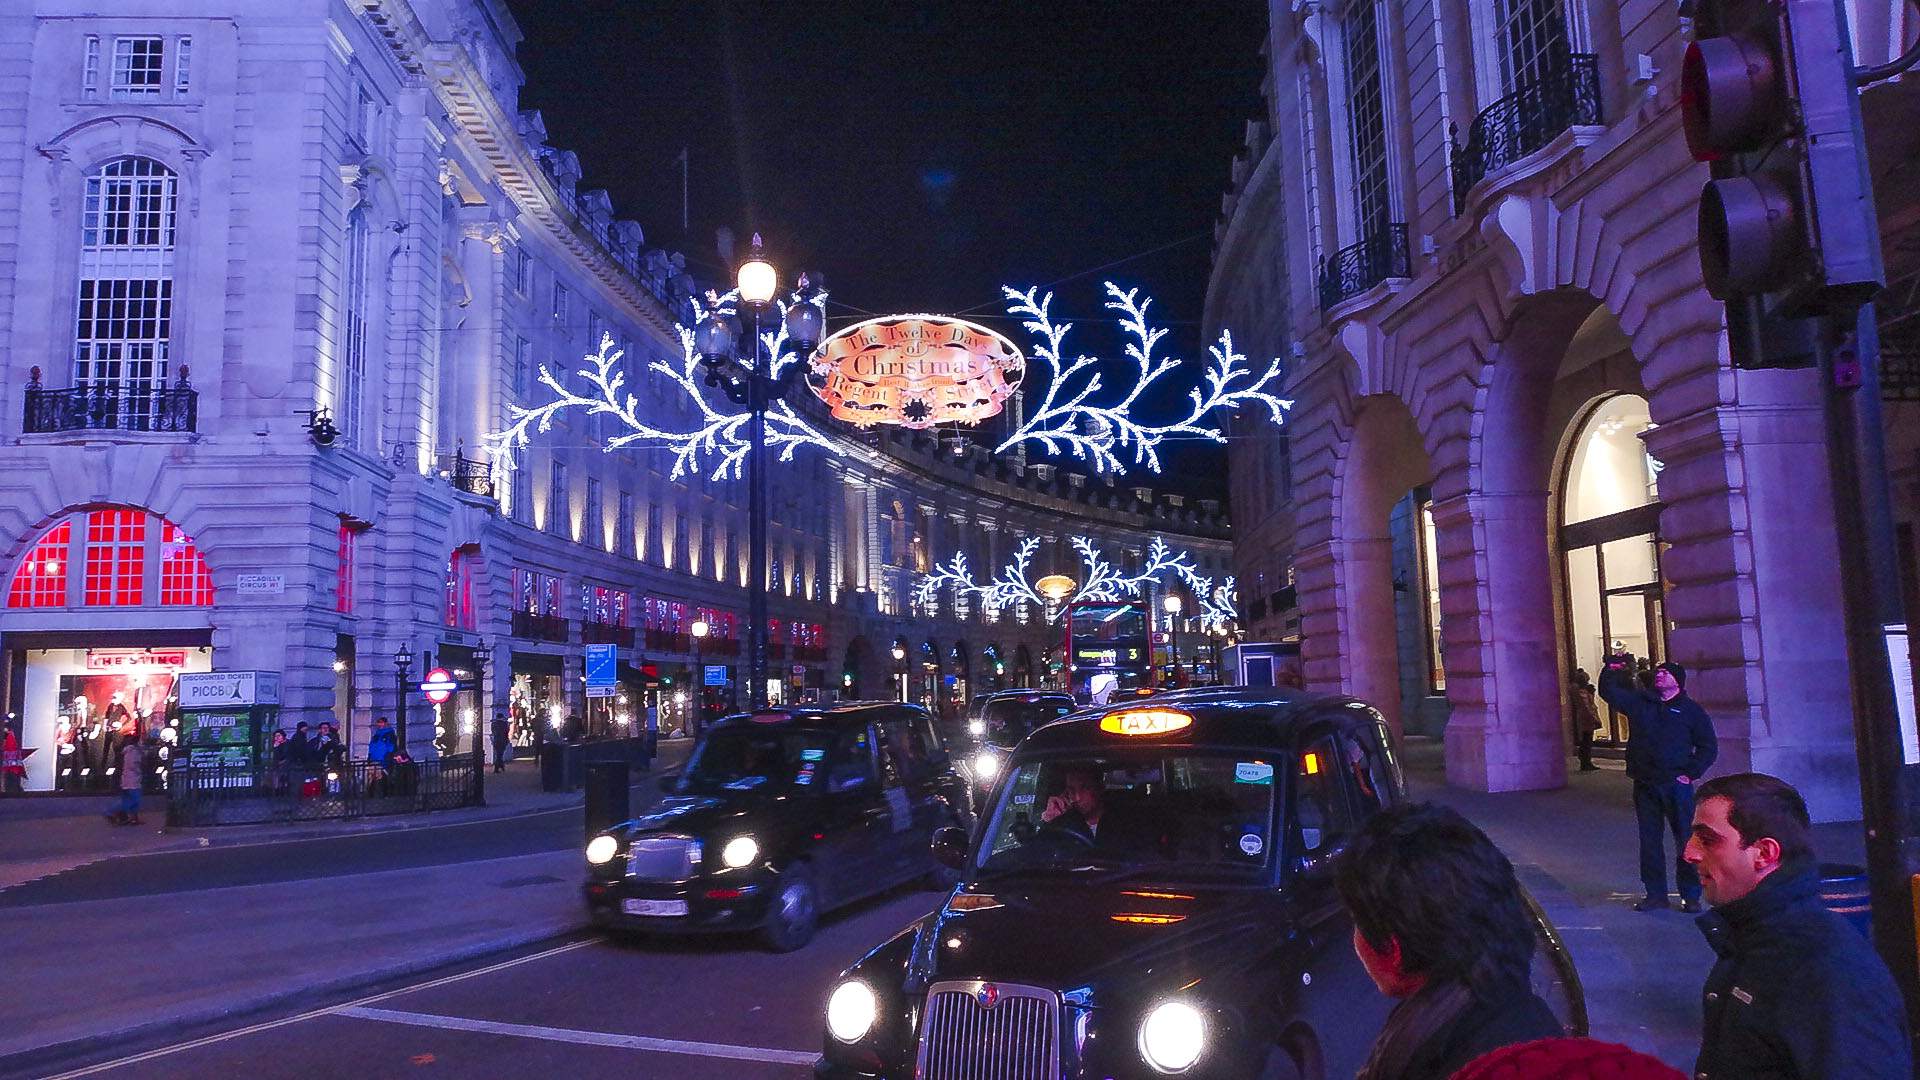 London Christmas Decorations | I Love Travel ( ˘ ³˘)